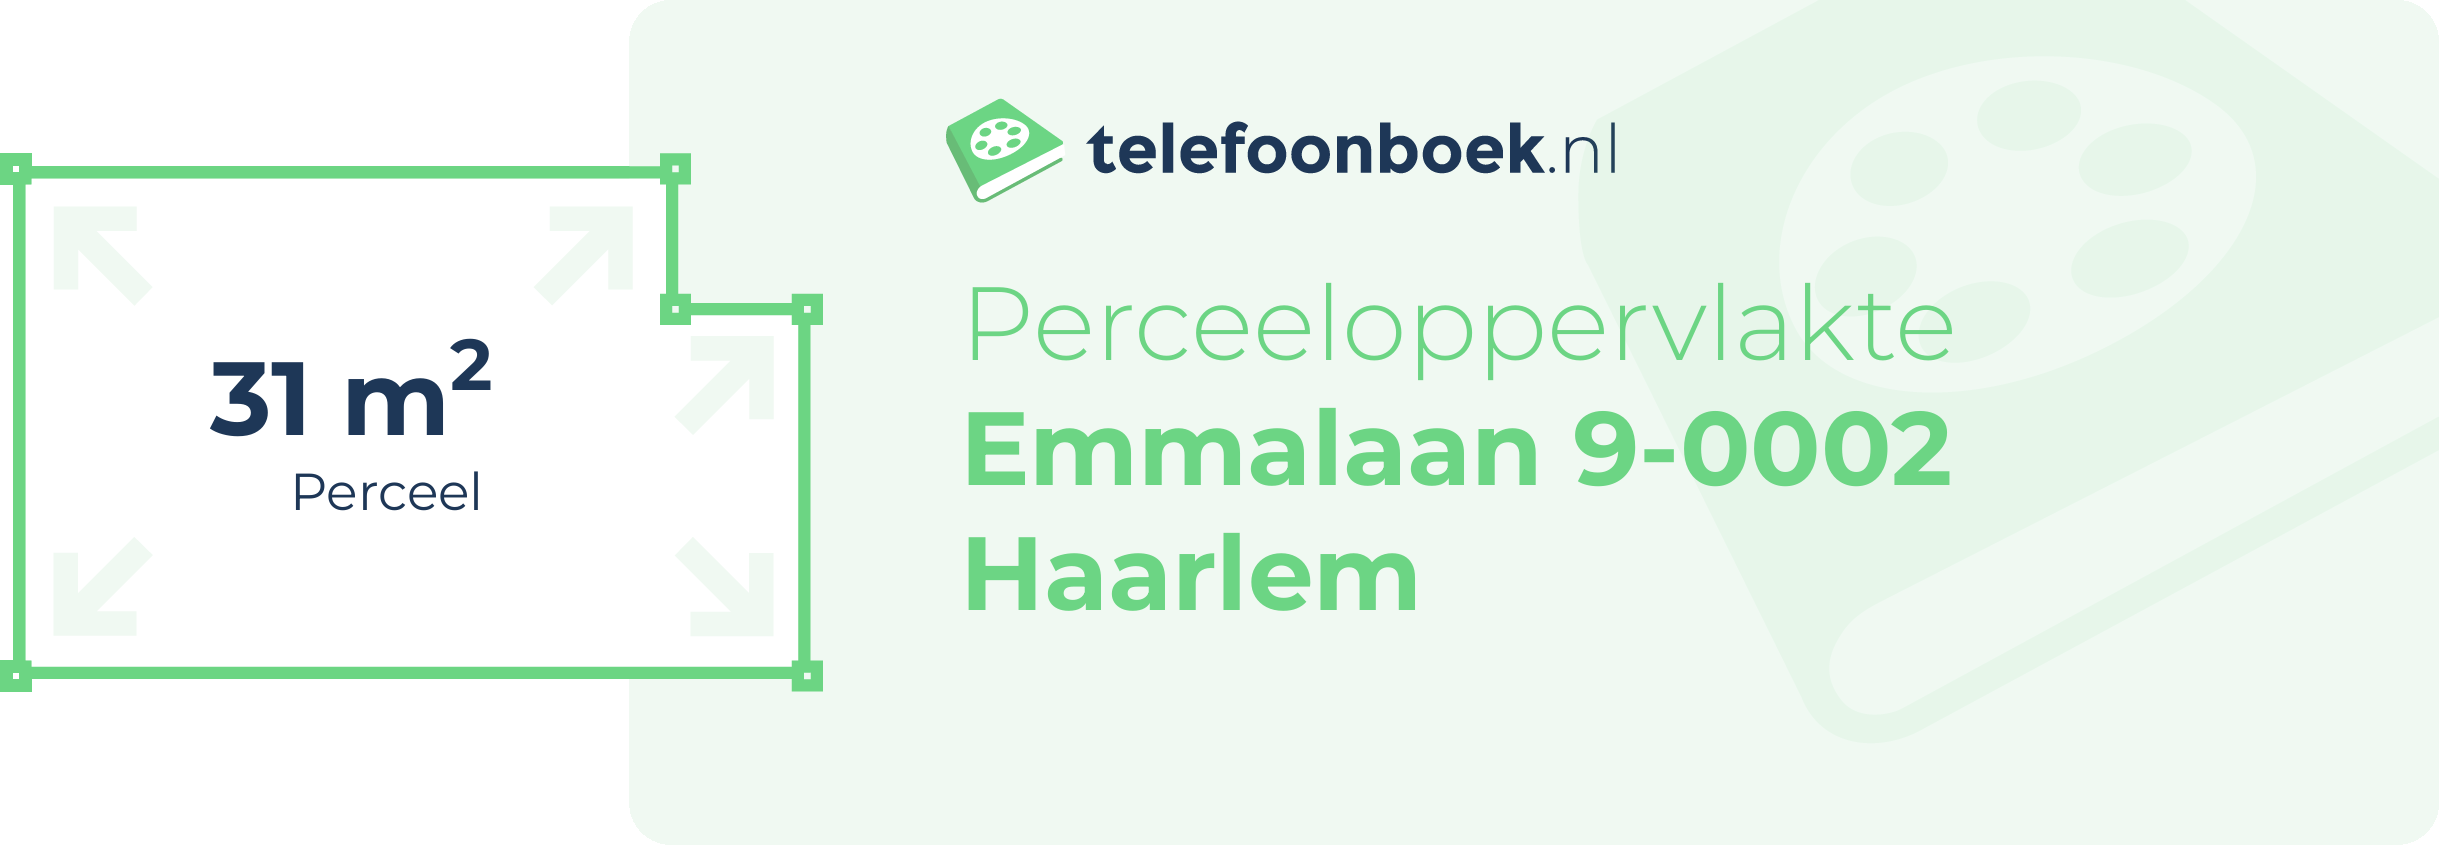 Perceeloppervlakte Emmalaan 9-0002 Haarlem